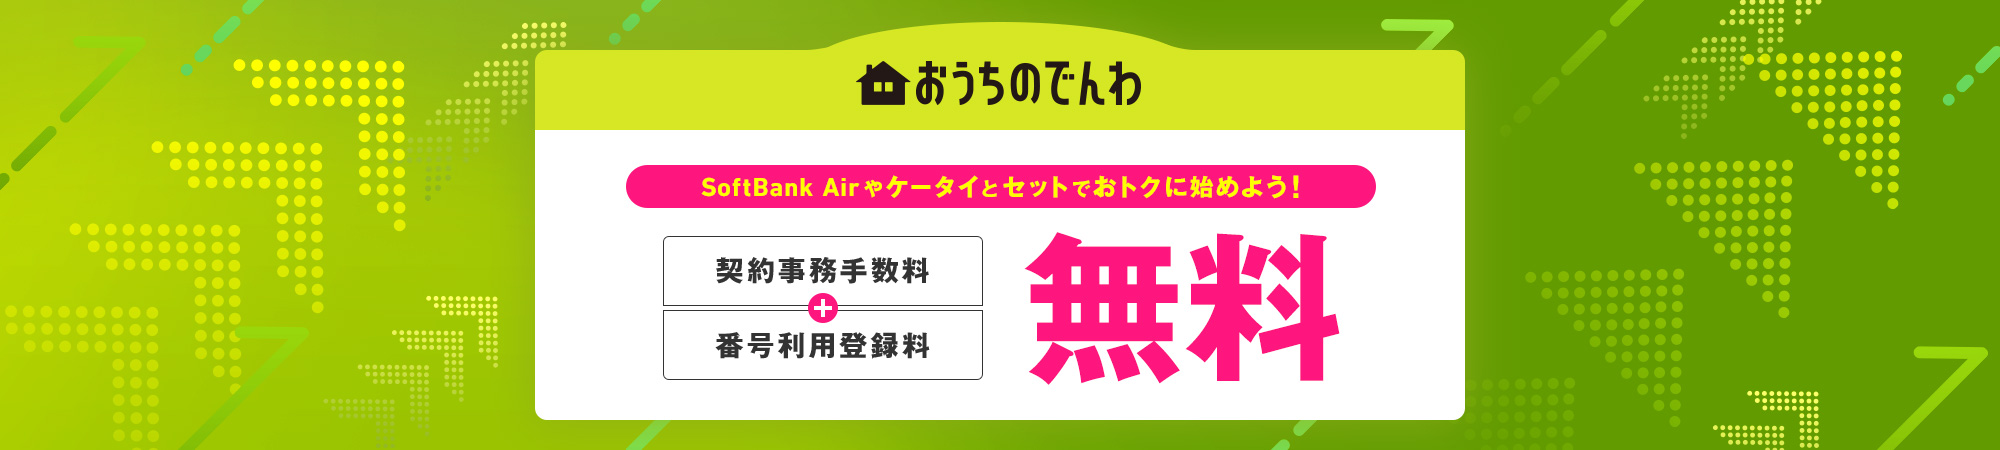 SoftBank Airやケータイとセットでおトクに始めよう！ 契約事務手数料 無料 番号利用登録料 無料